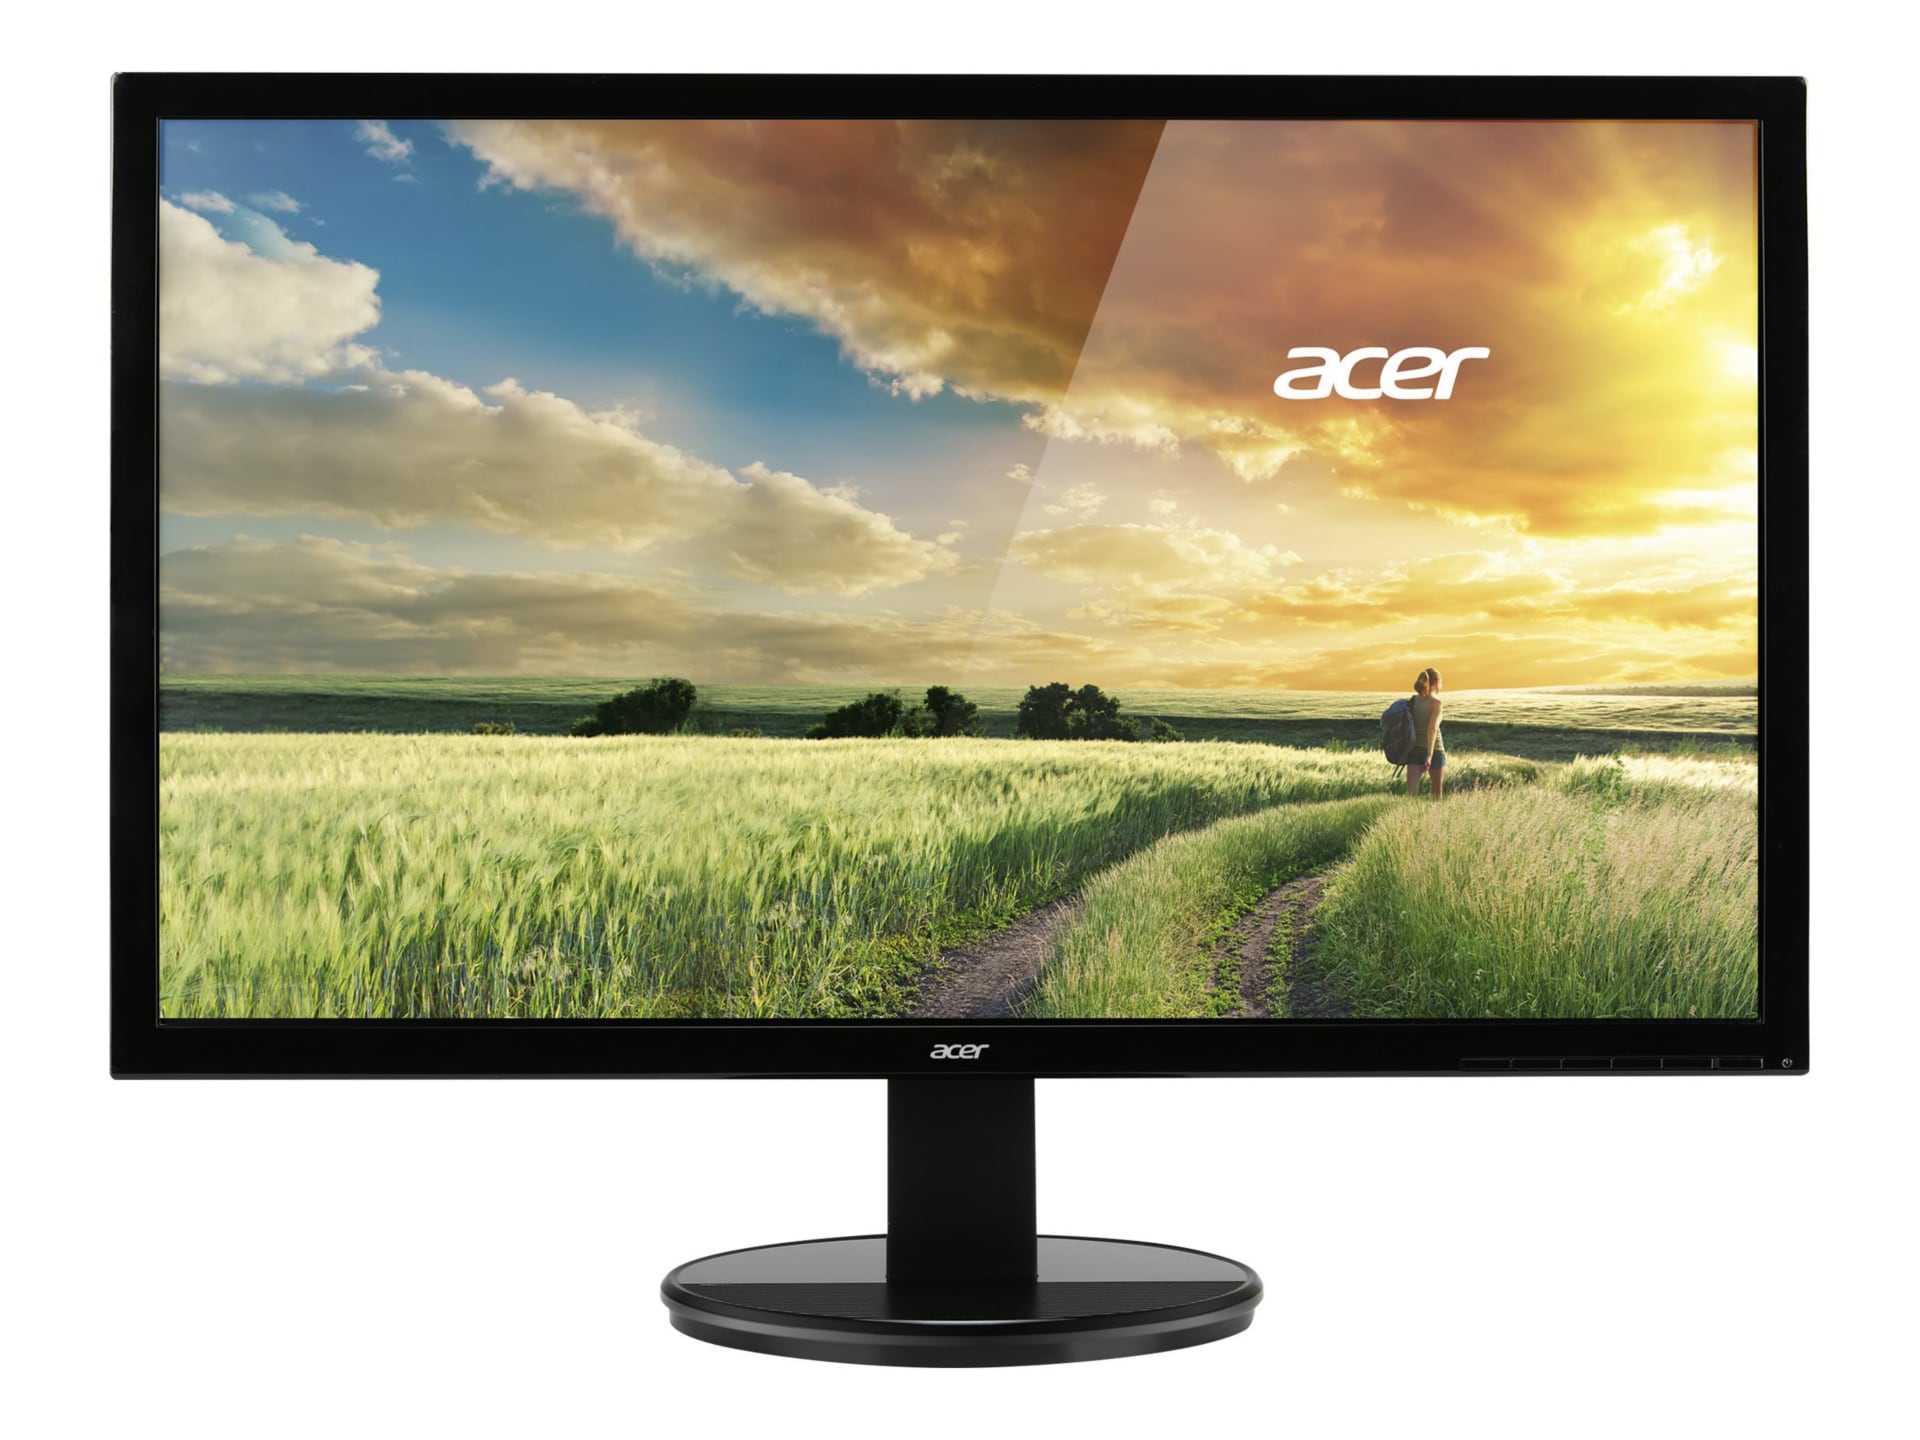 Acer K222hql Led Monitor Full Hd 1080p 215 Umwx3aa004 